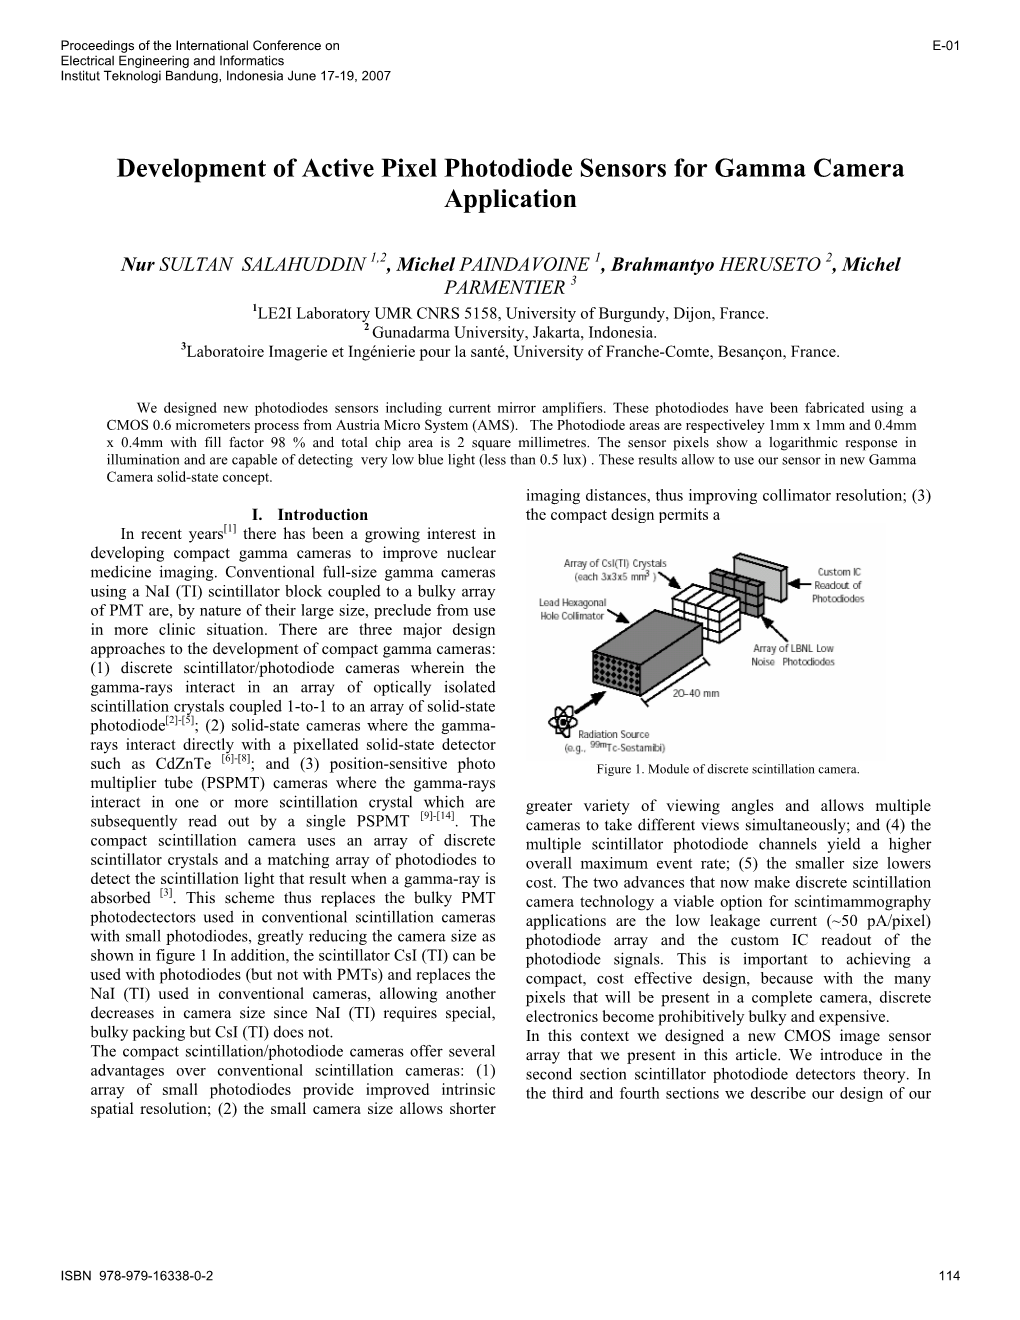 Development of Active Pixel Photodiode Sensors for Gamma Camera Application